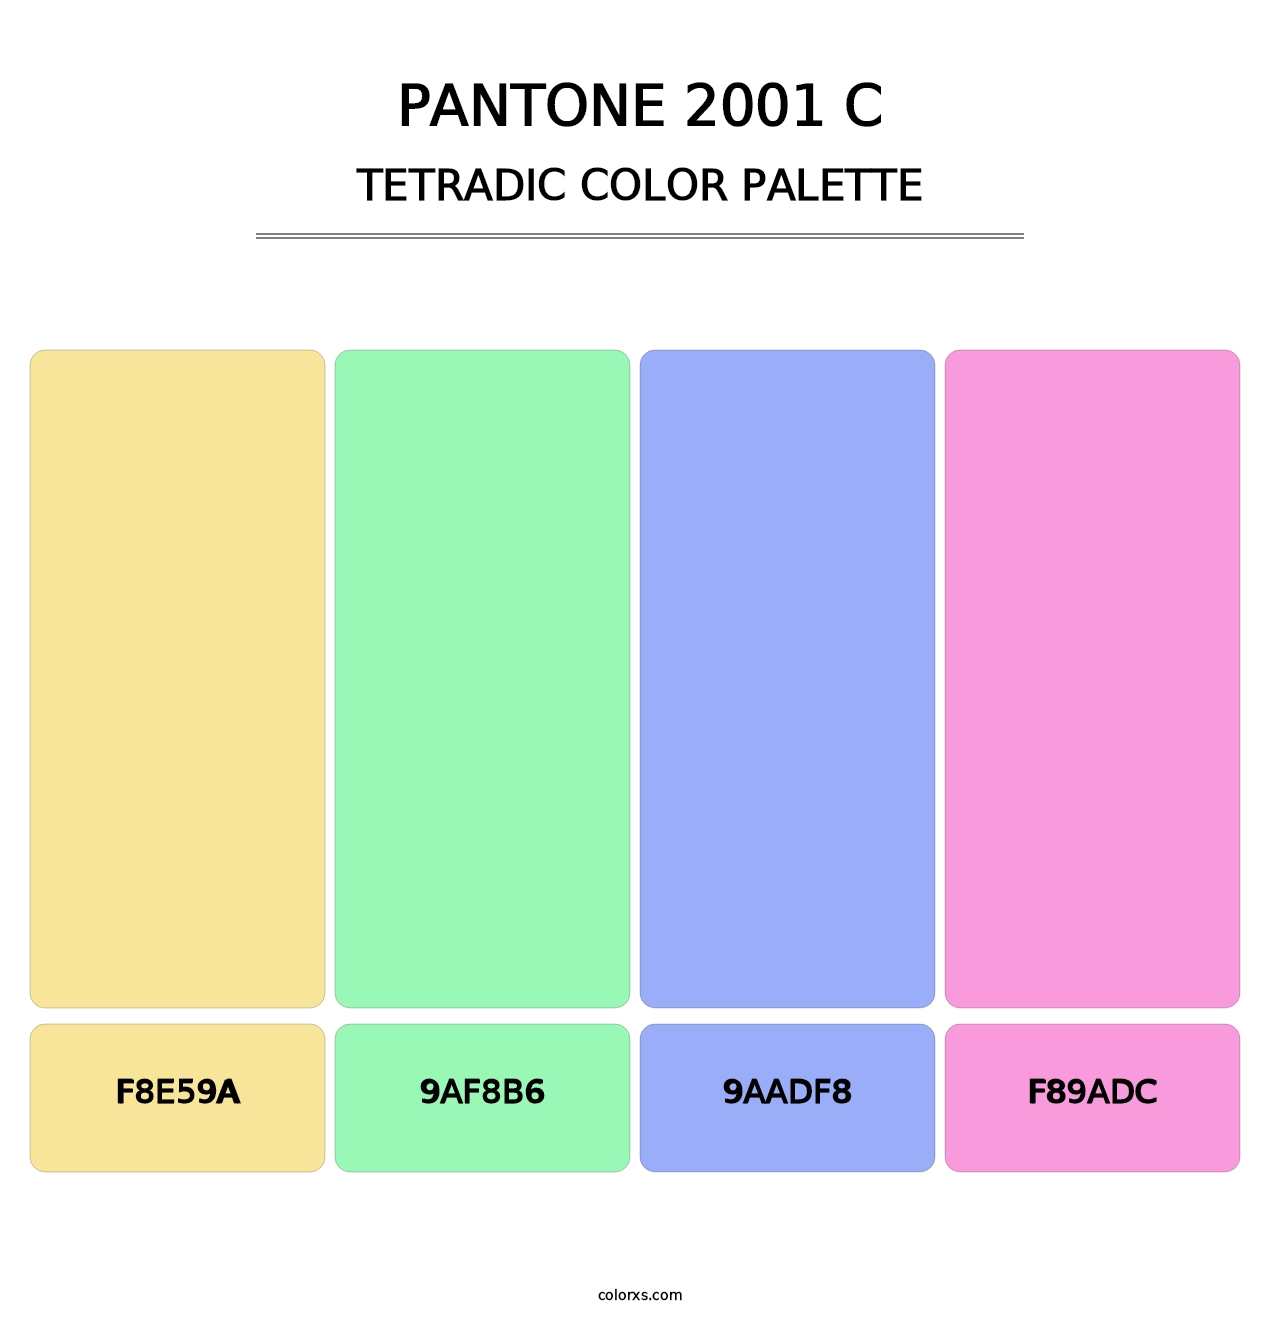 PANTONE 2001 C - Tetradic Color Palette